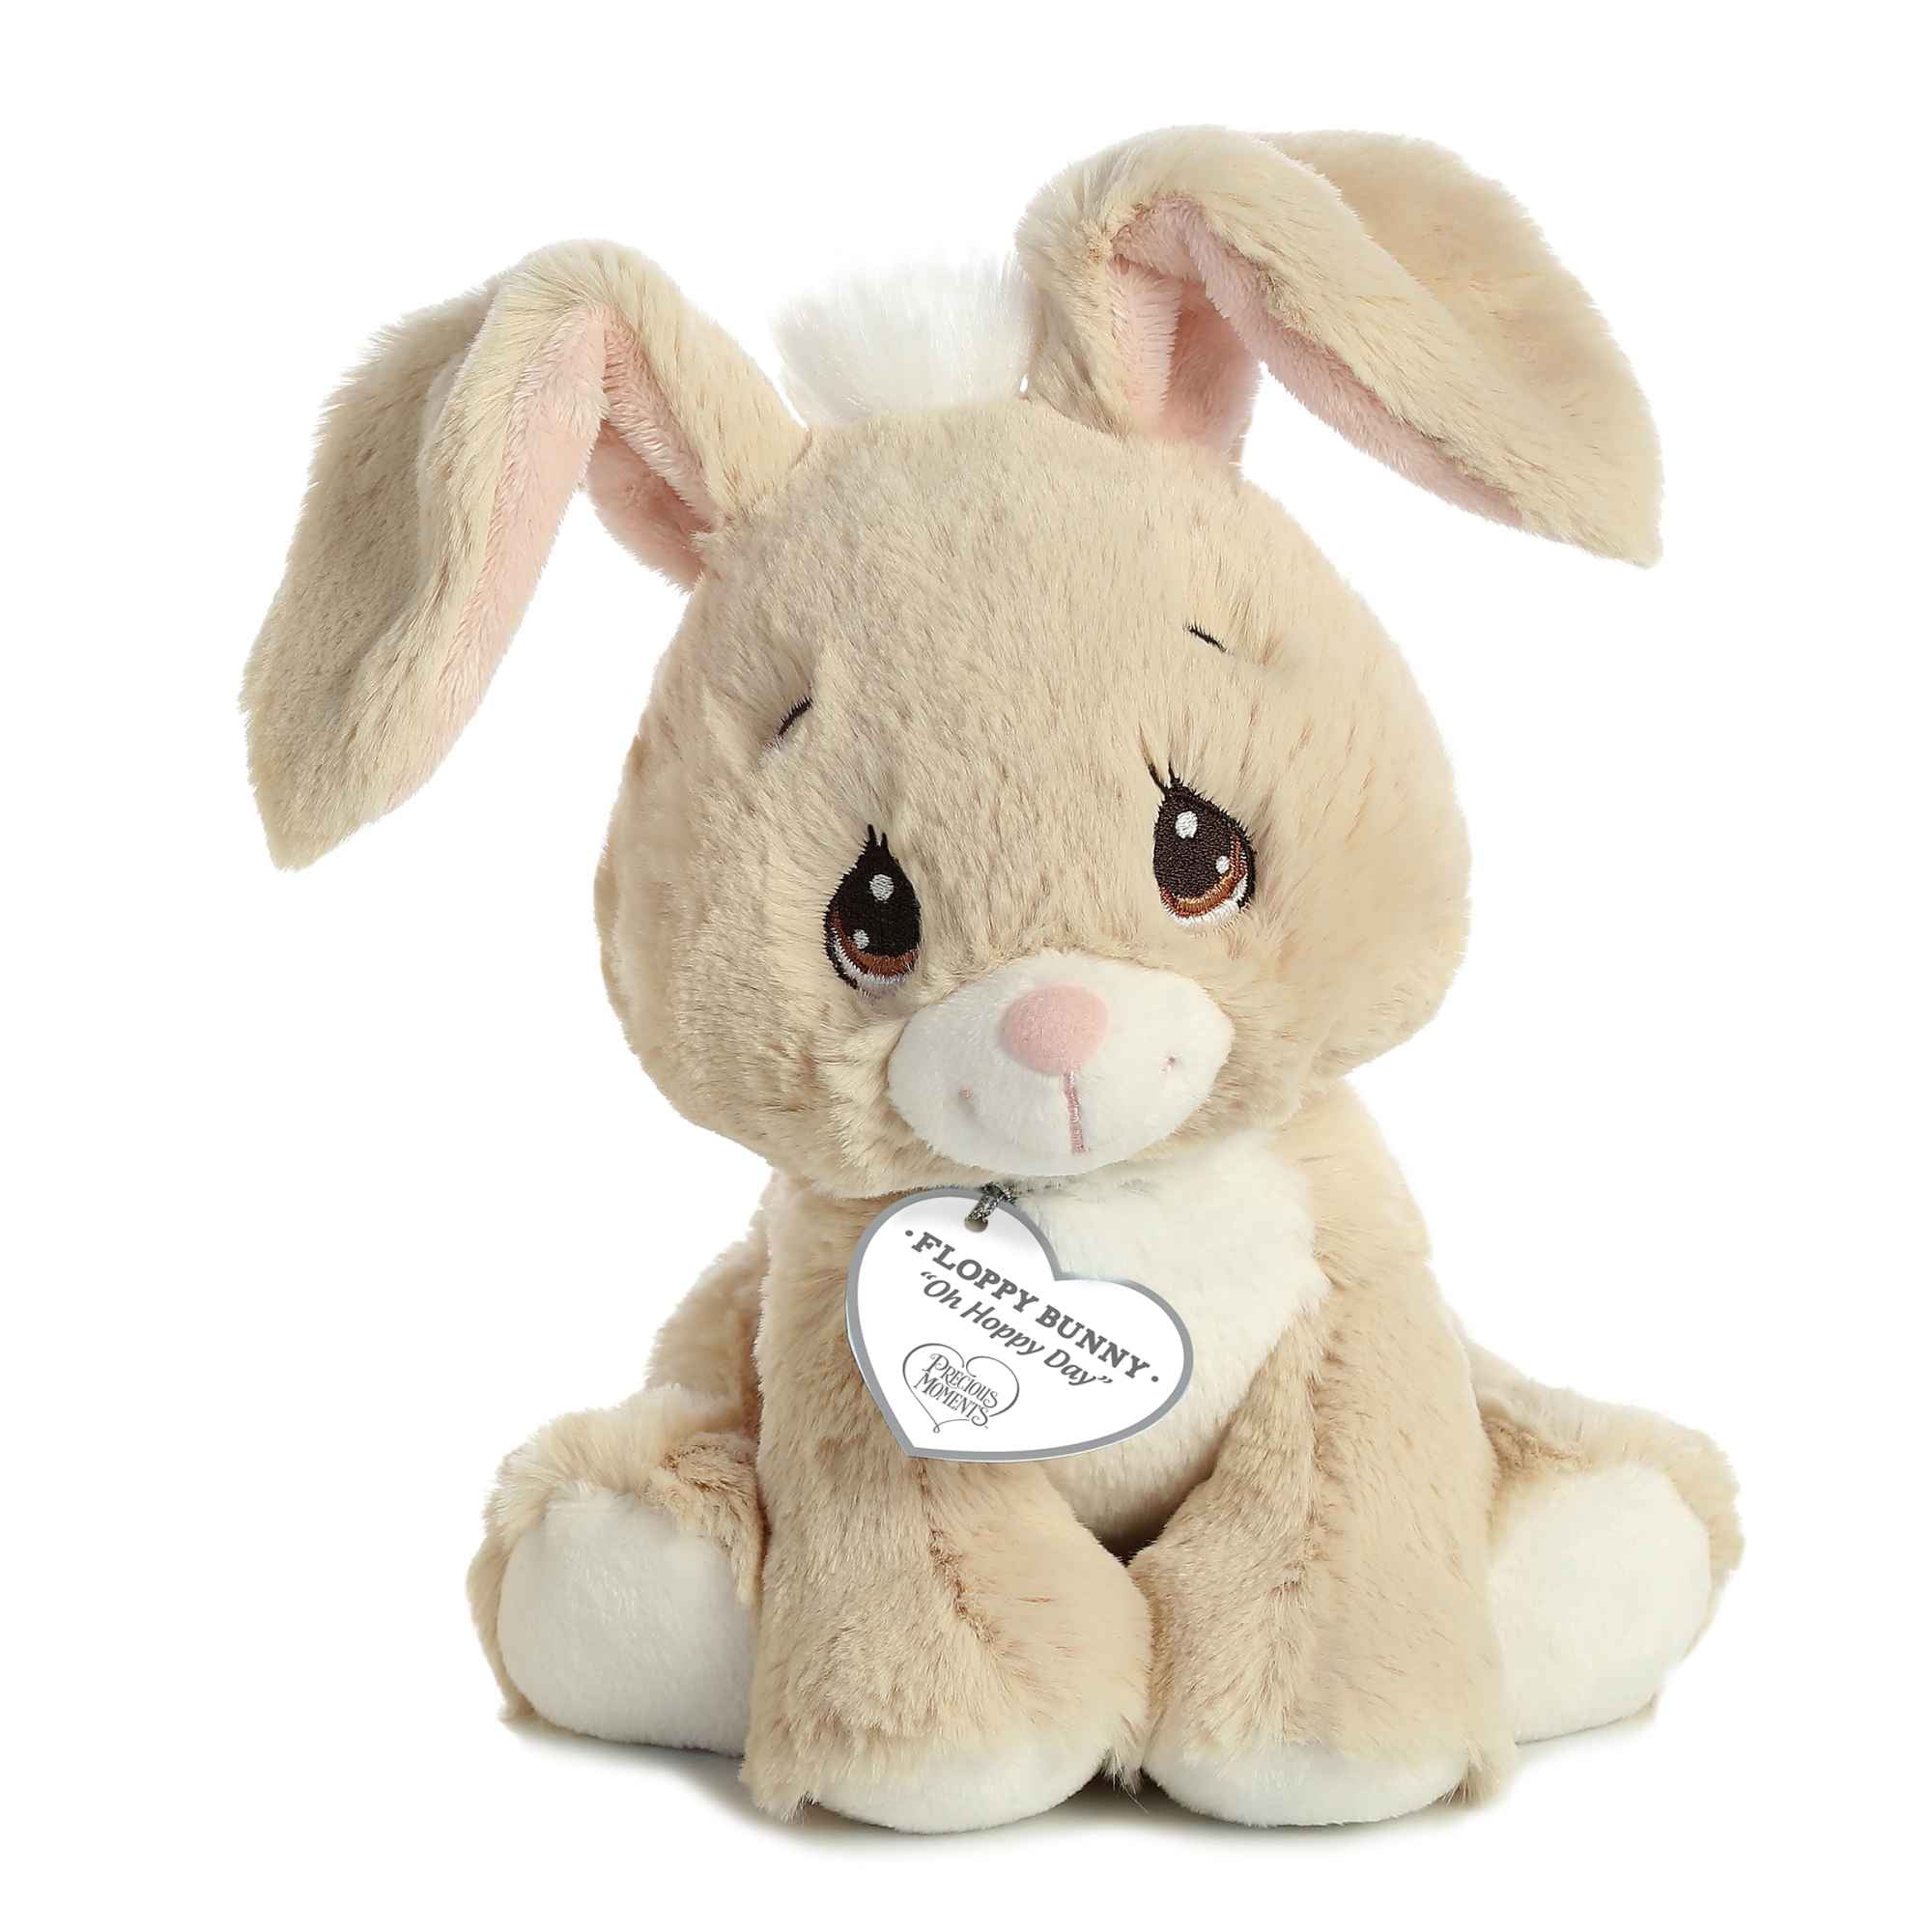 GUND Bunny Rabbit Lil Wispers 7" Tan Stuffed Plush Toy Doll 4033511 for sale online 